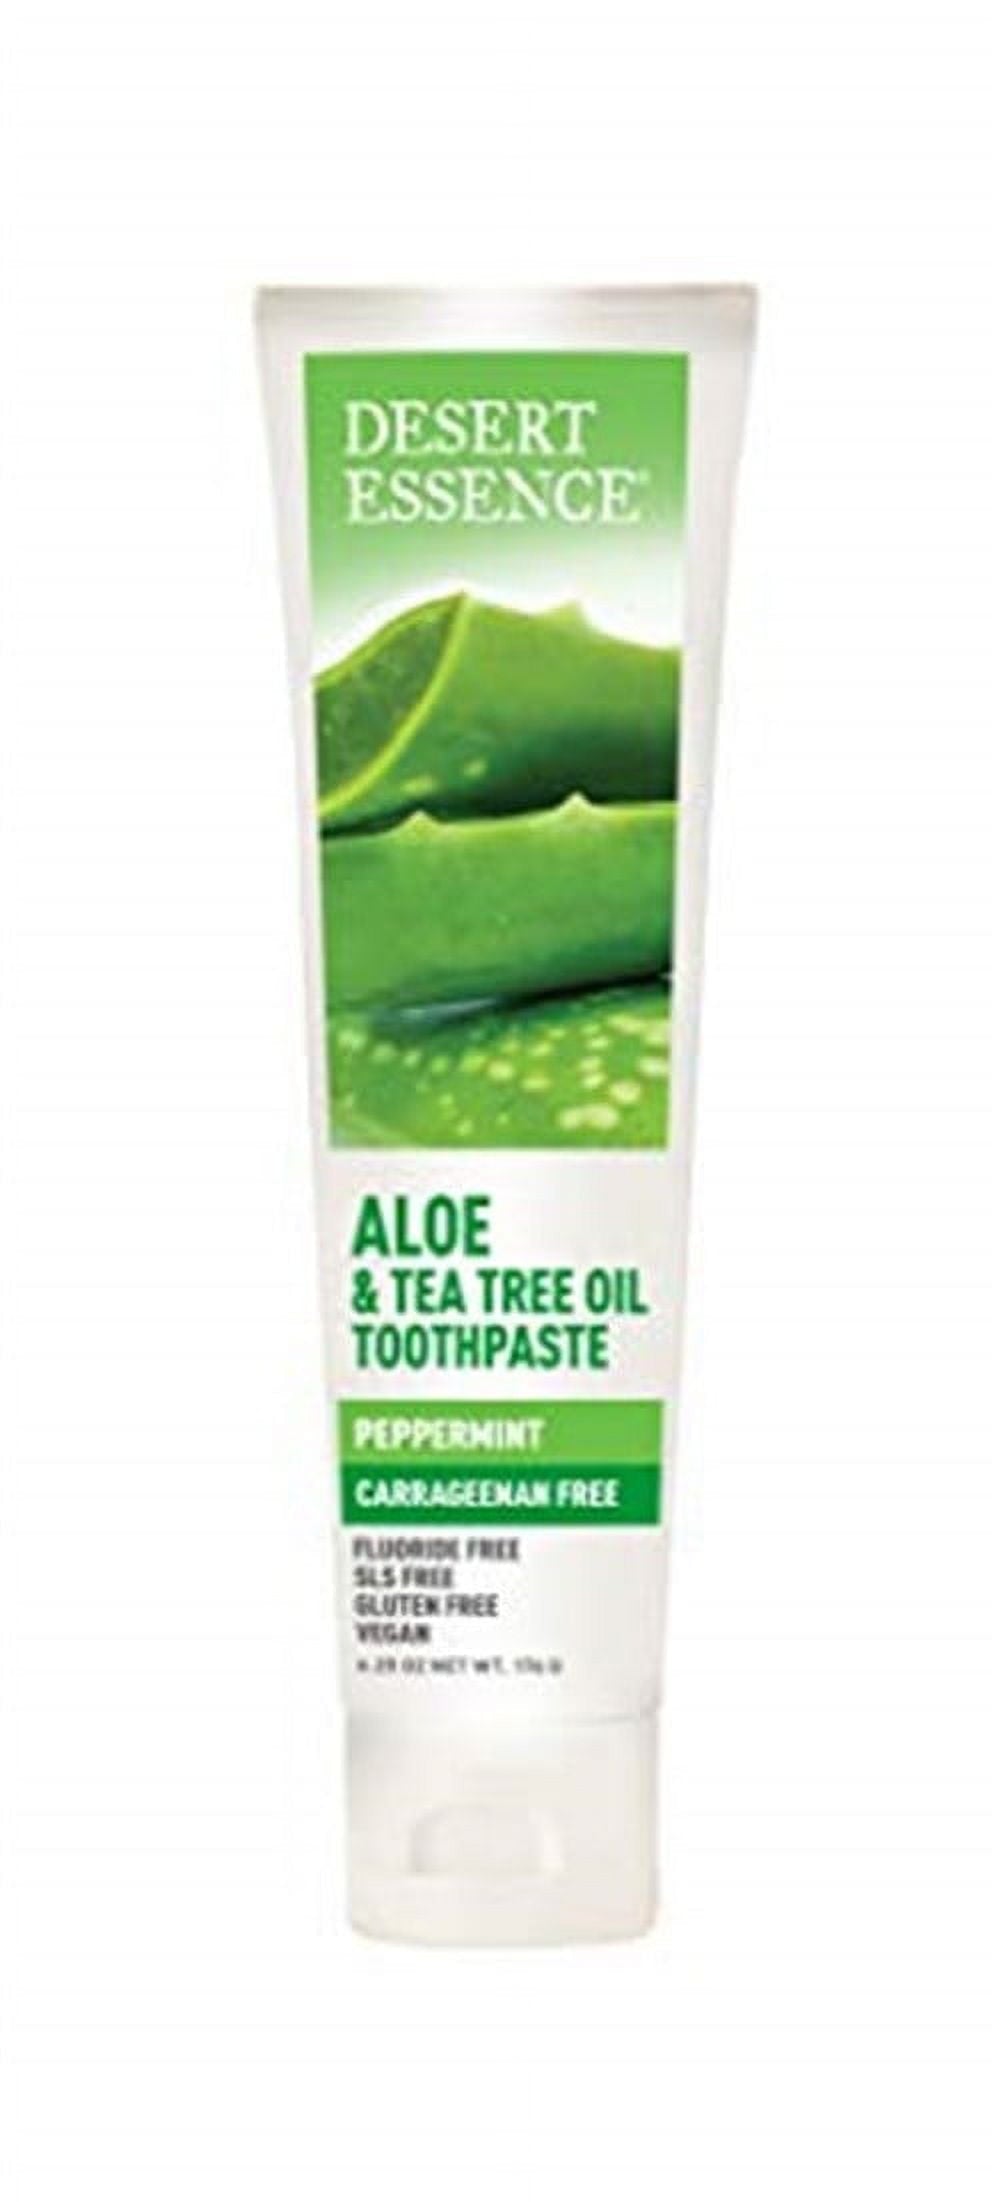 Desert Essence Aloe & Tea Tree Oil Toothpaste - Flouride Free - Peppermint 6.25 oz Tube